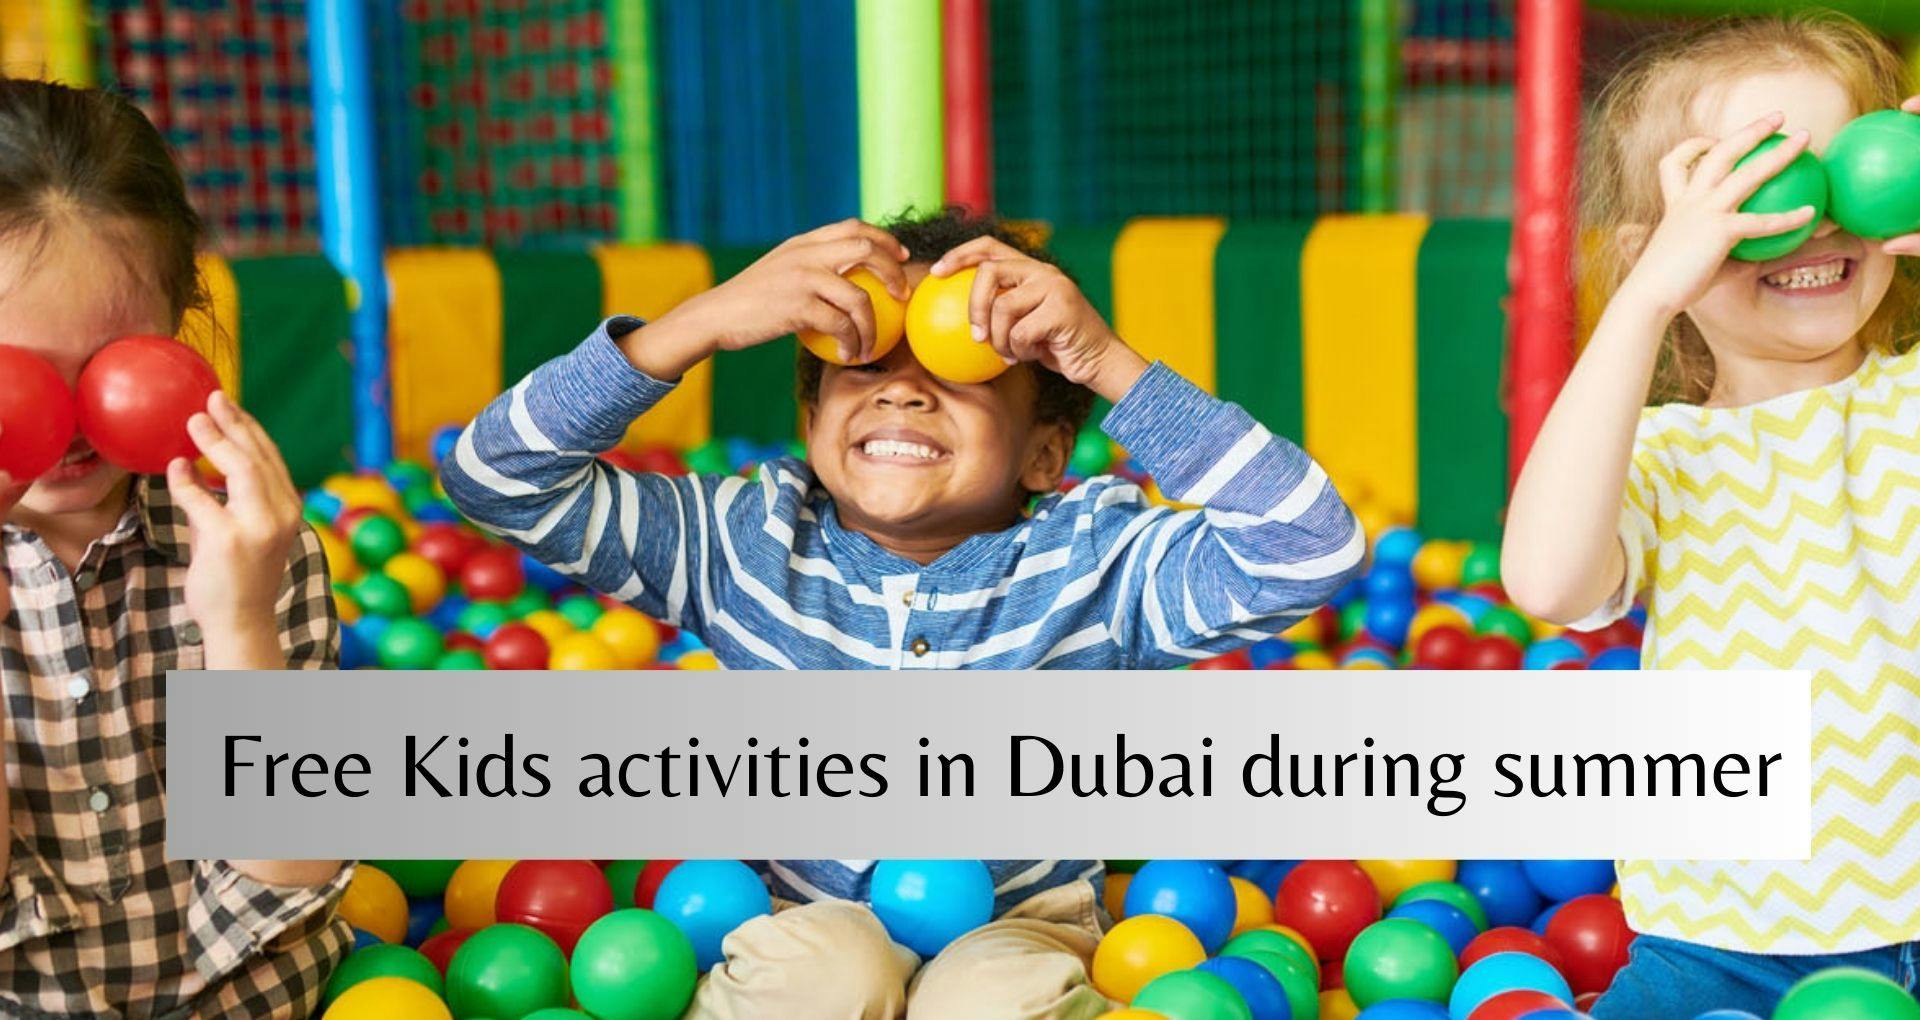 Free Kids activities in Dubai during summer